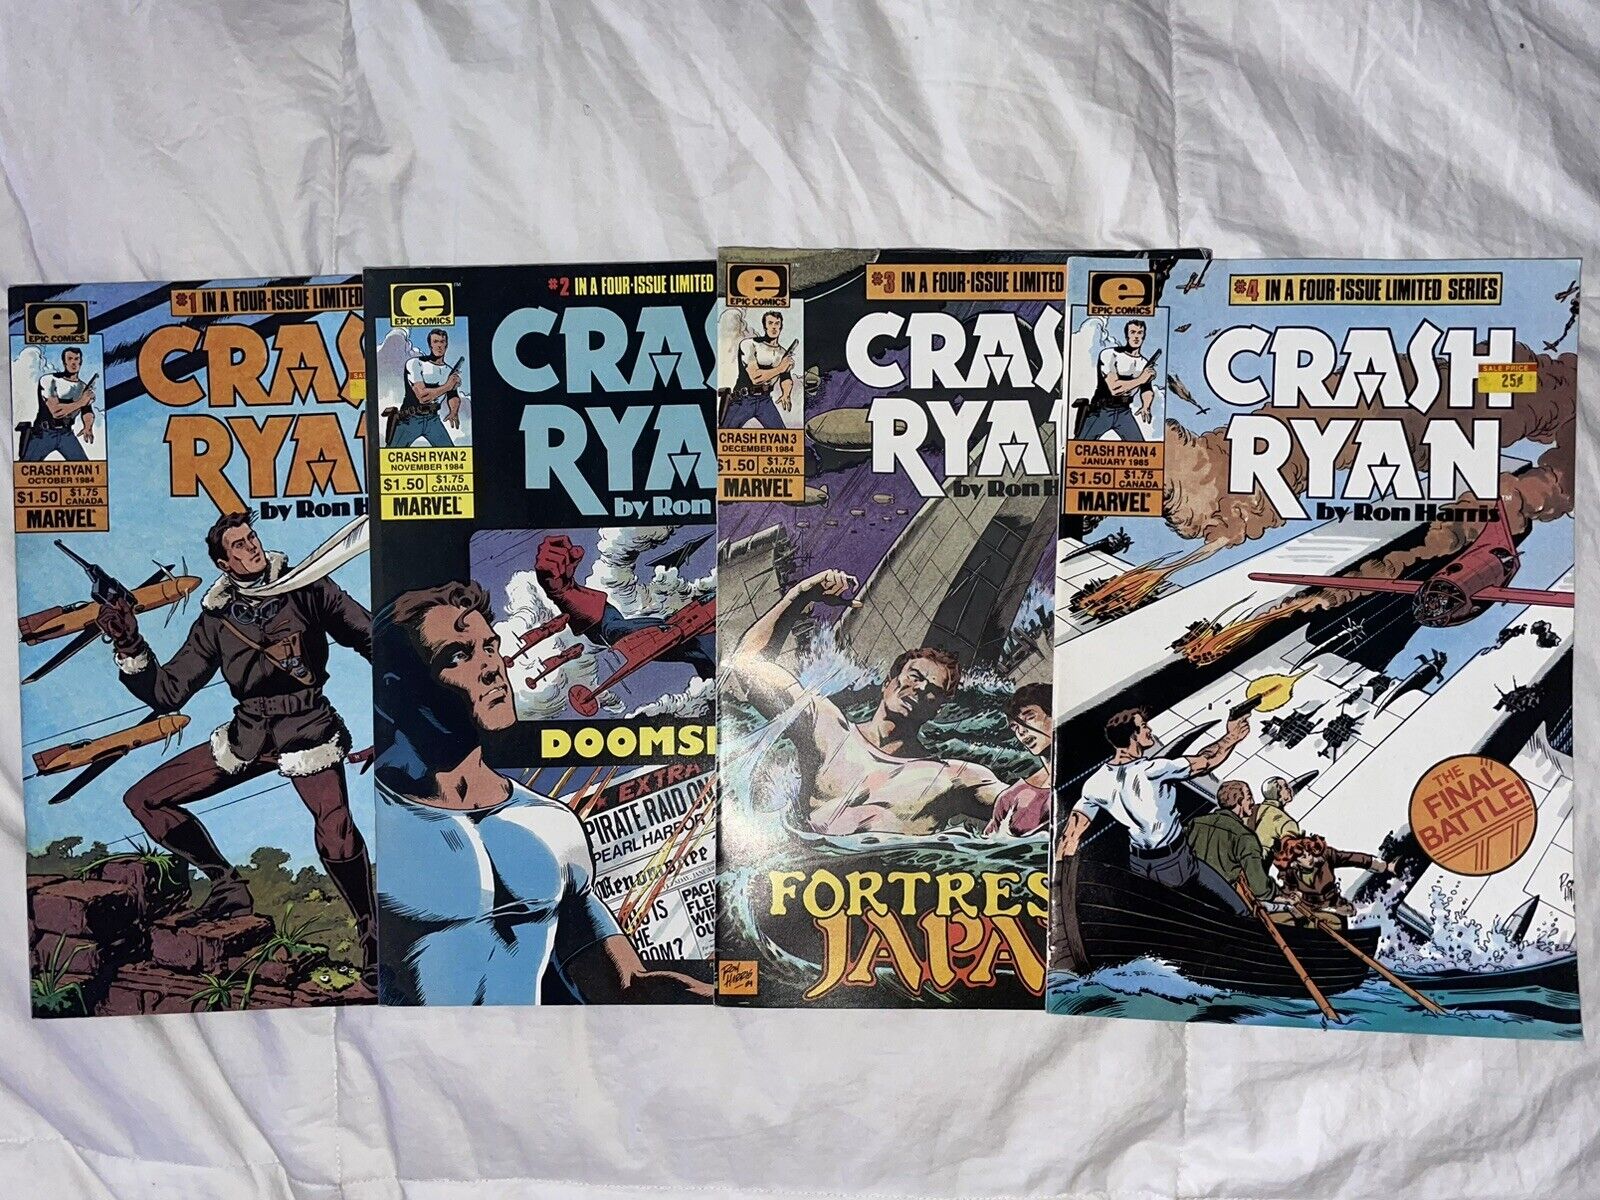 Crash Ryan #1-4 Complete Limited Series - 1984-85 Marvel Epic Comics